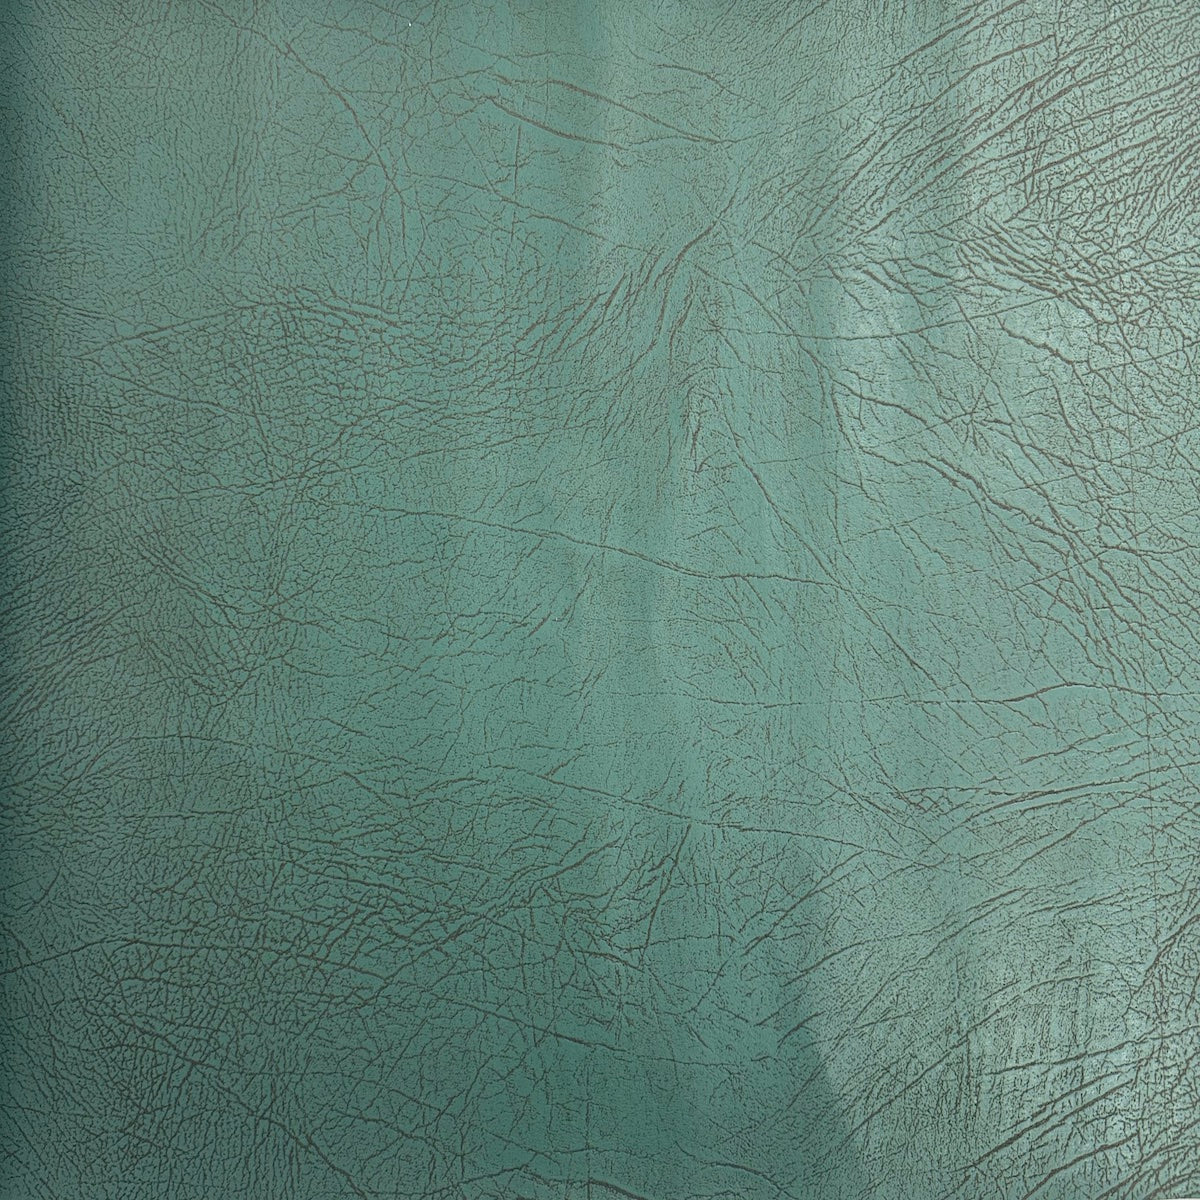 Tissu vinyle en daim simili cuir vieilli bleu turquoise vintage